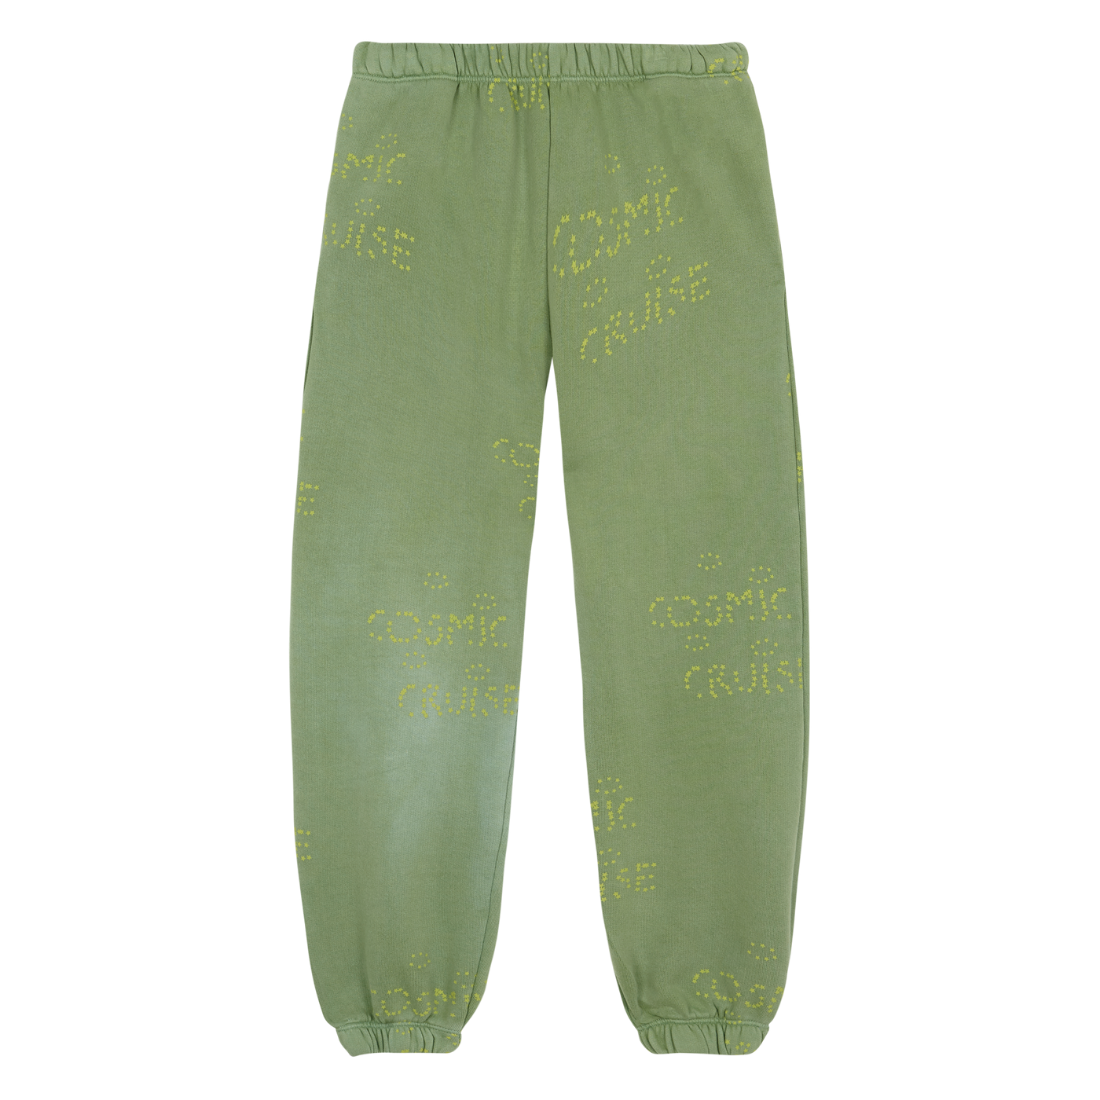 Cosmic Green Pants